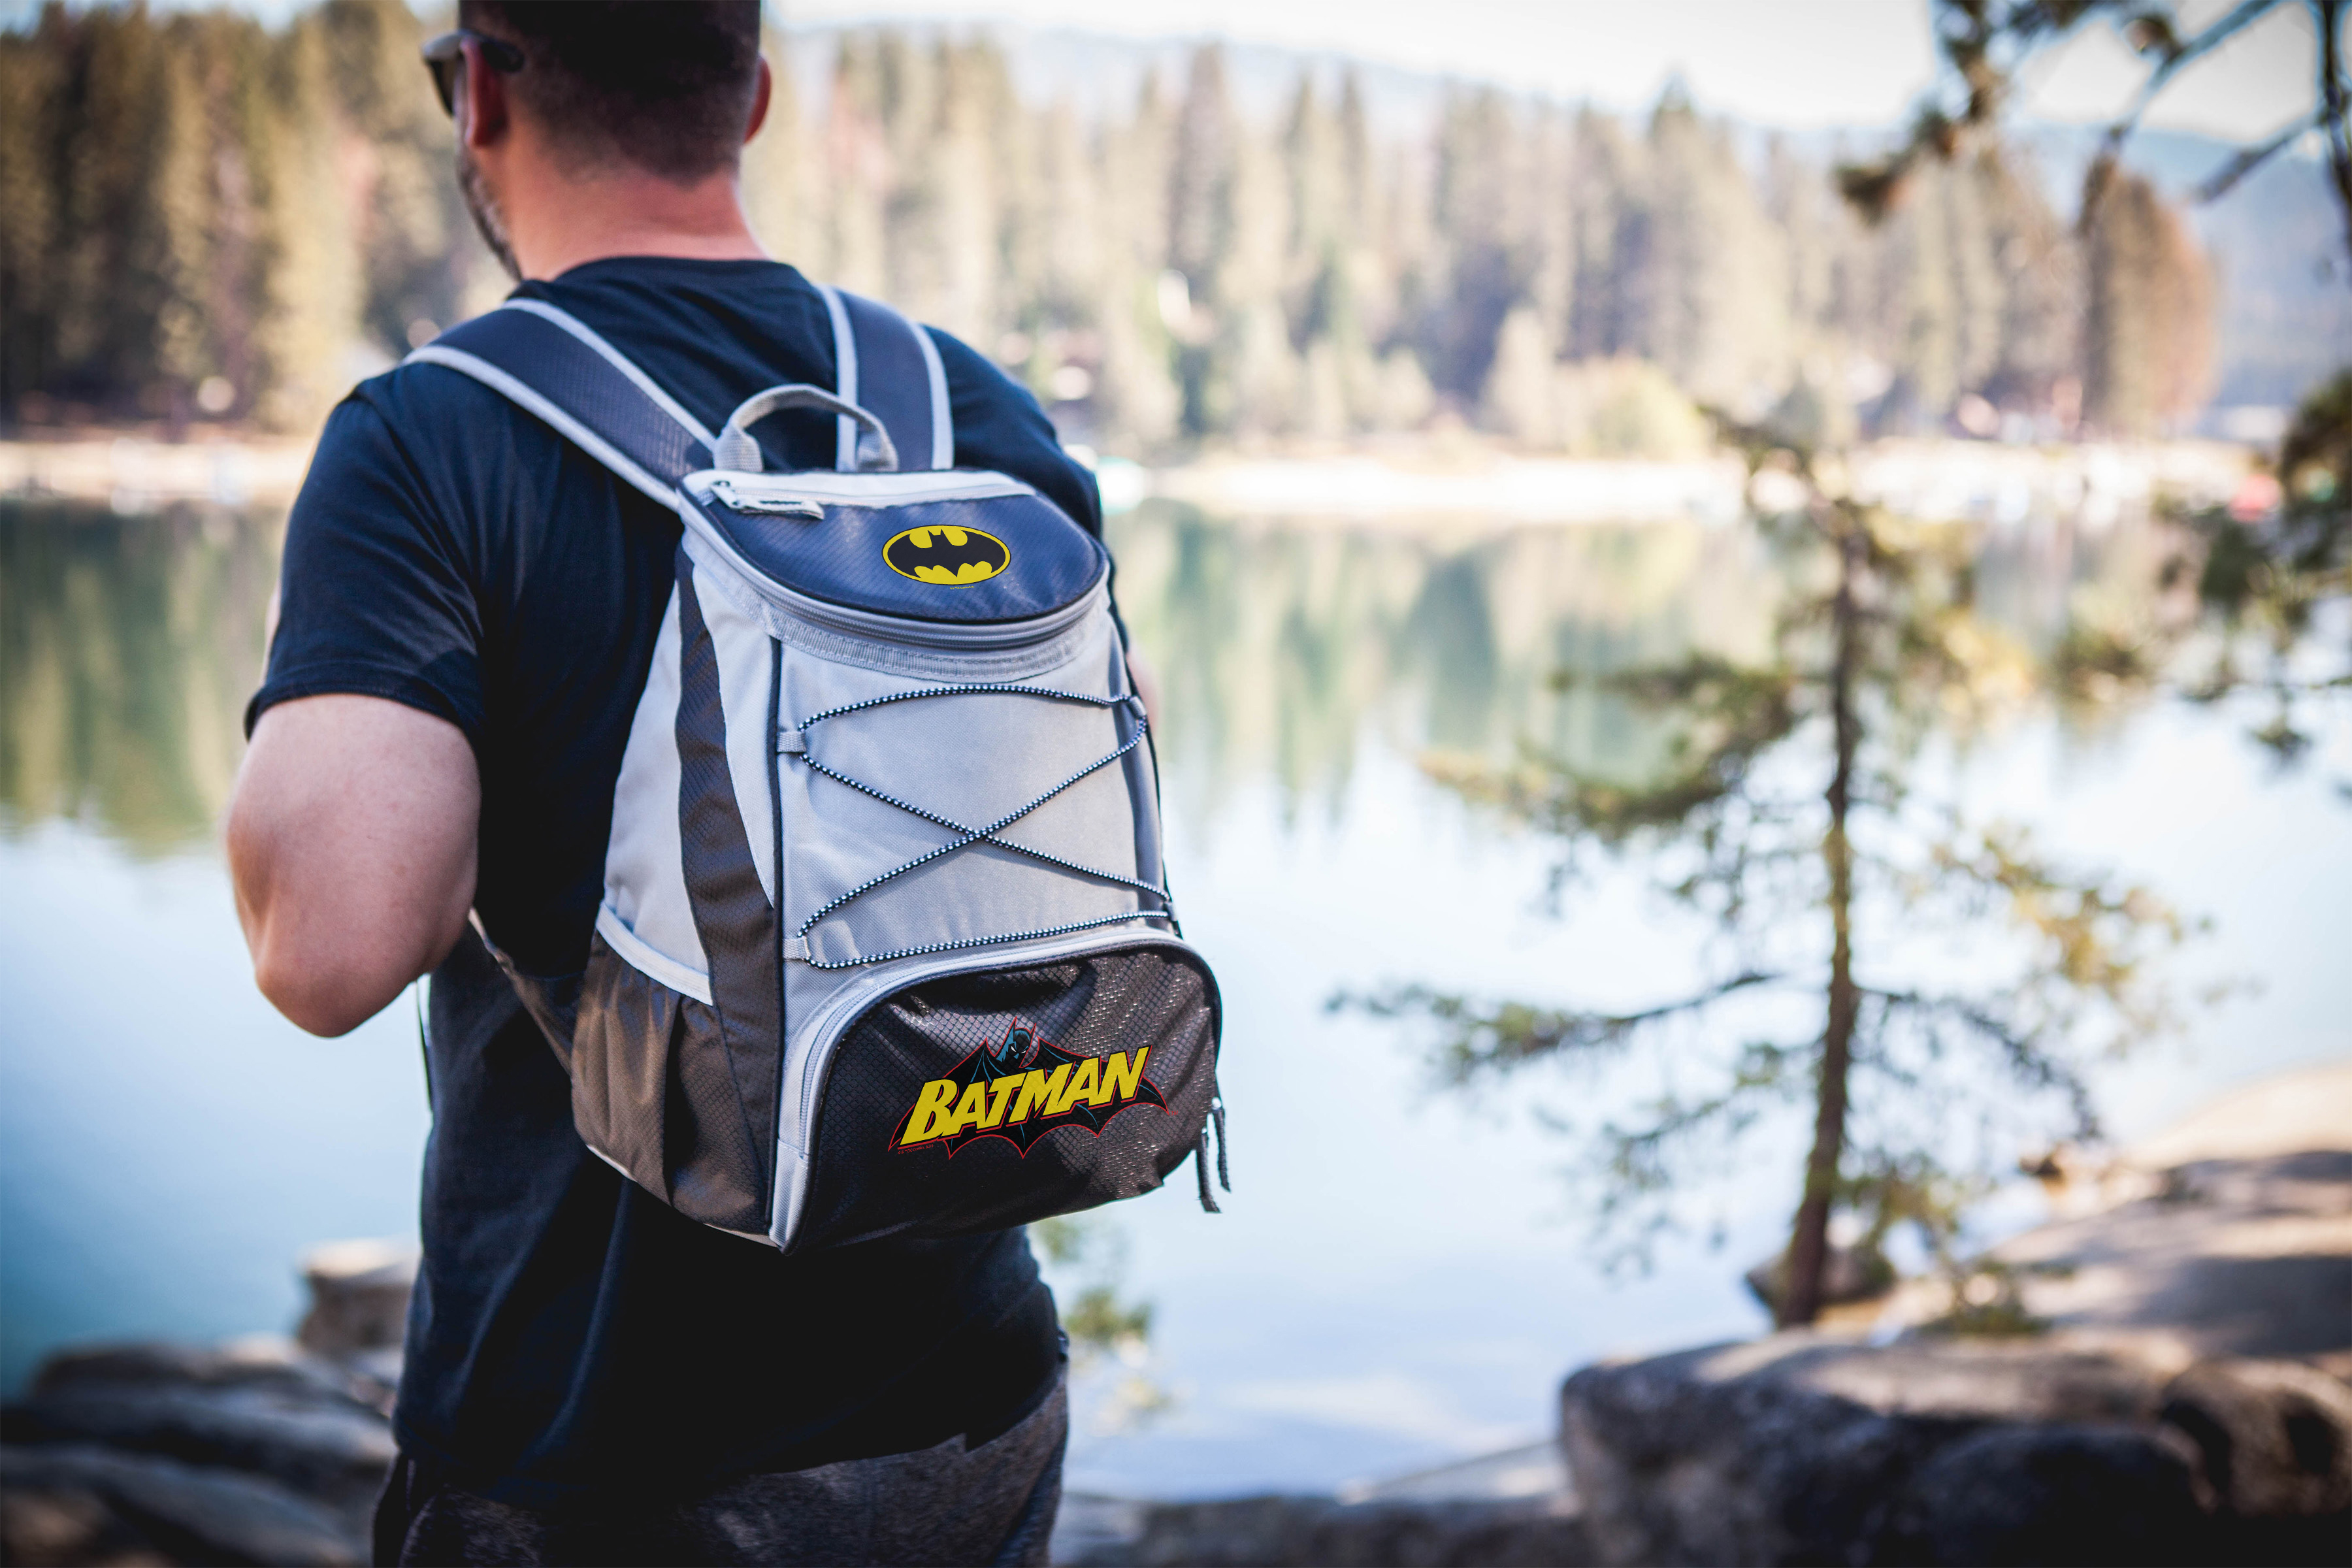 Batman - PTX Backpack Cooler